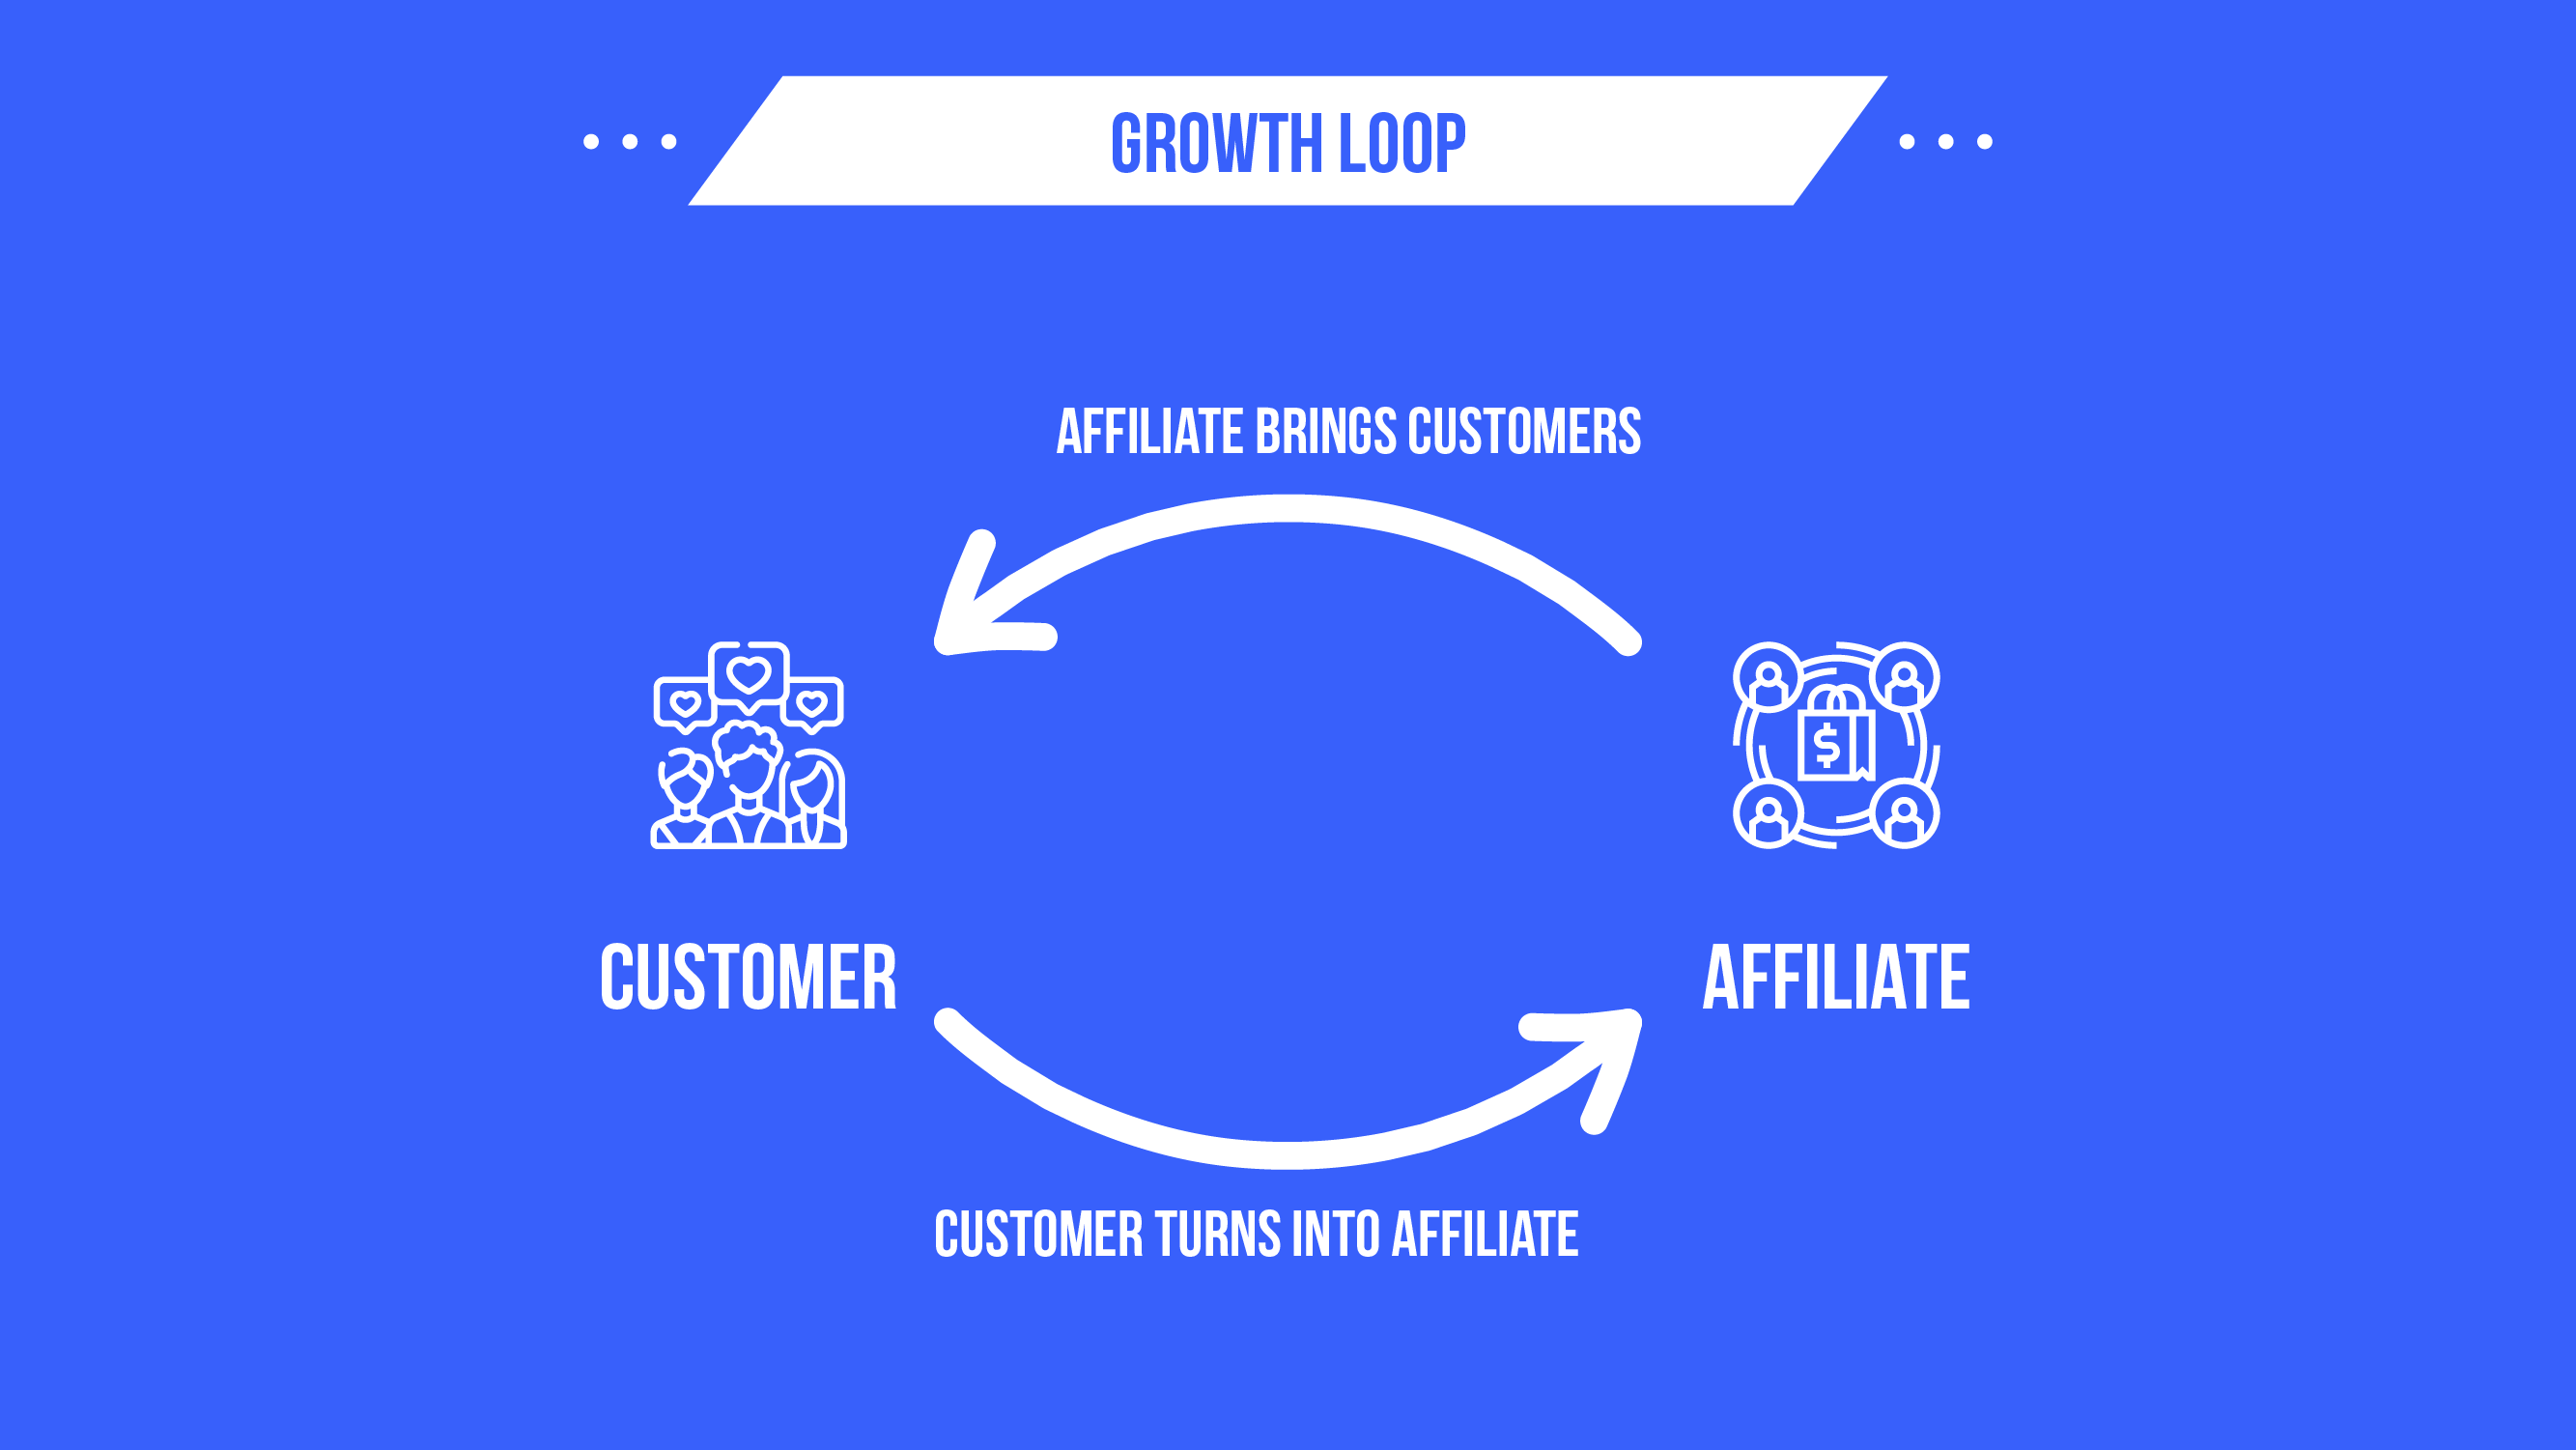 Growth Loop using affiliate marketing